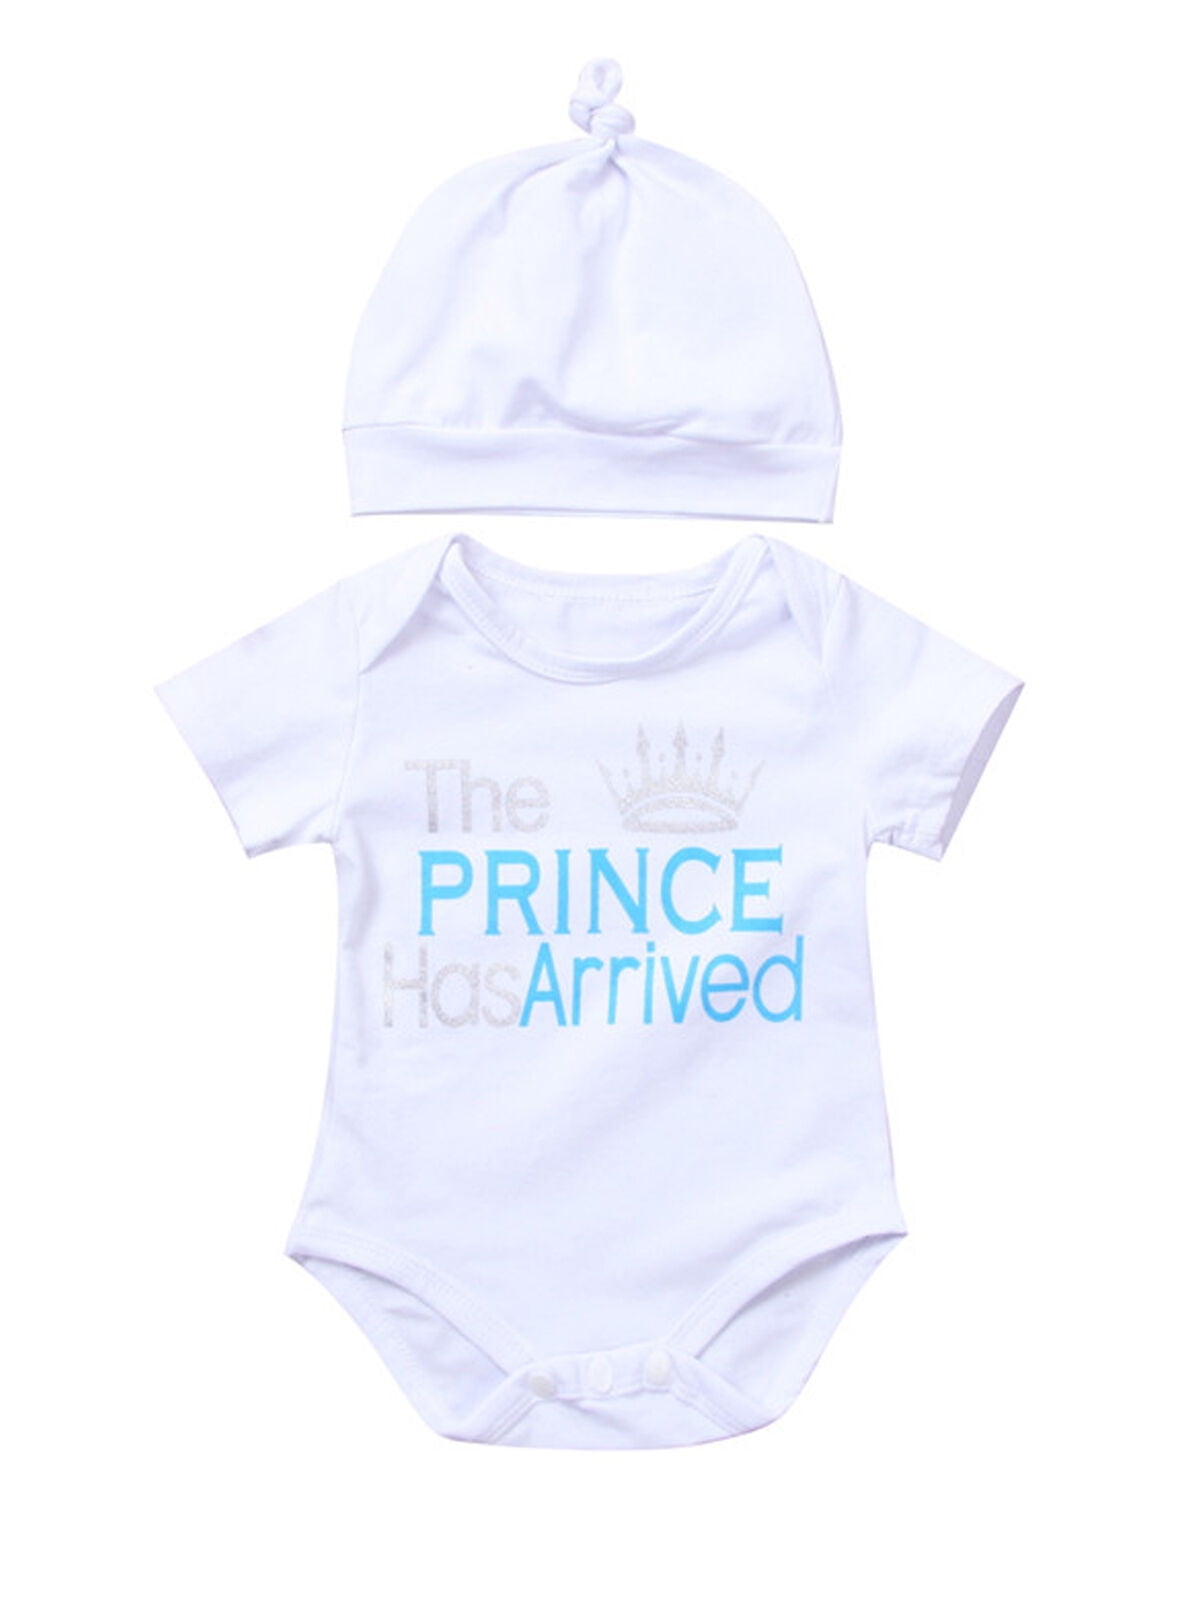 Prince has arrived baby blue rompersuit bodysuit baby grow sleepsuit babygrow 